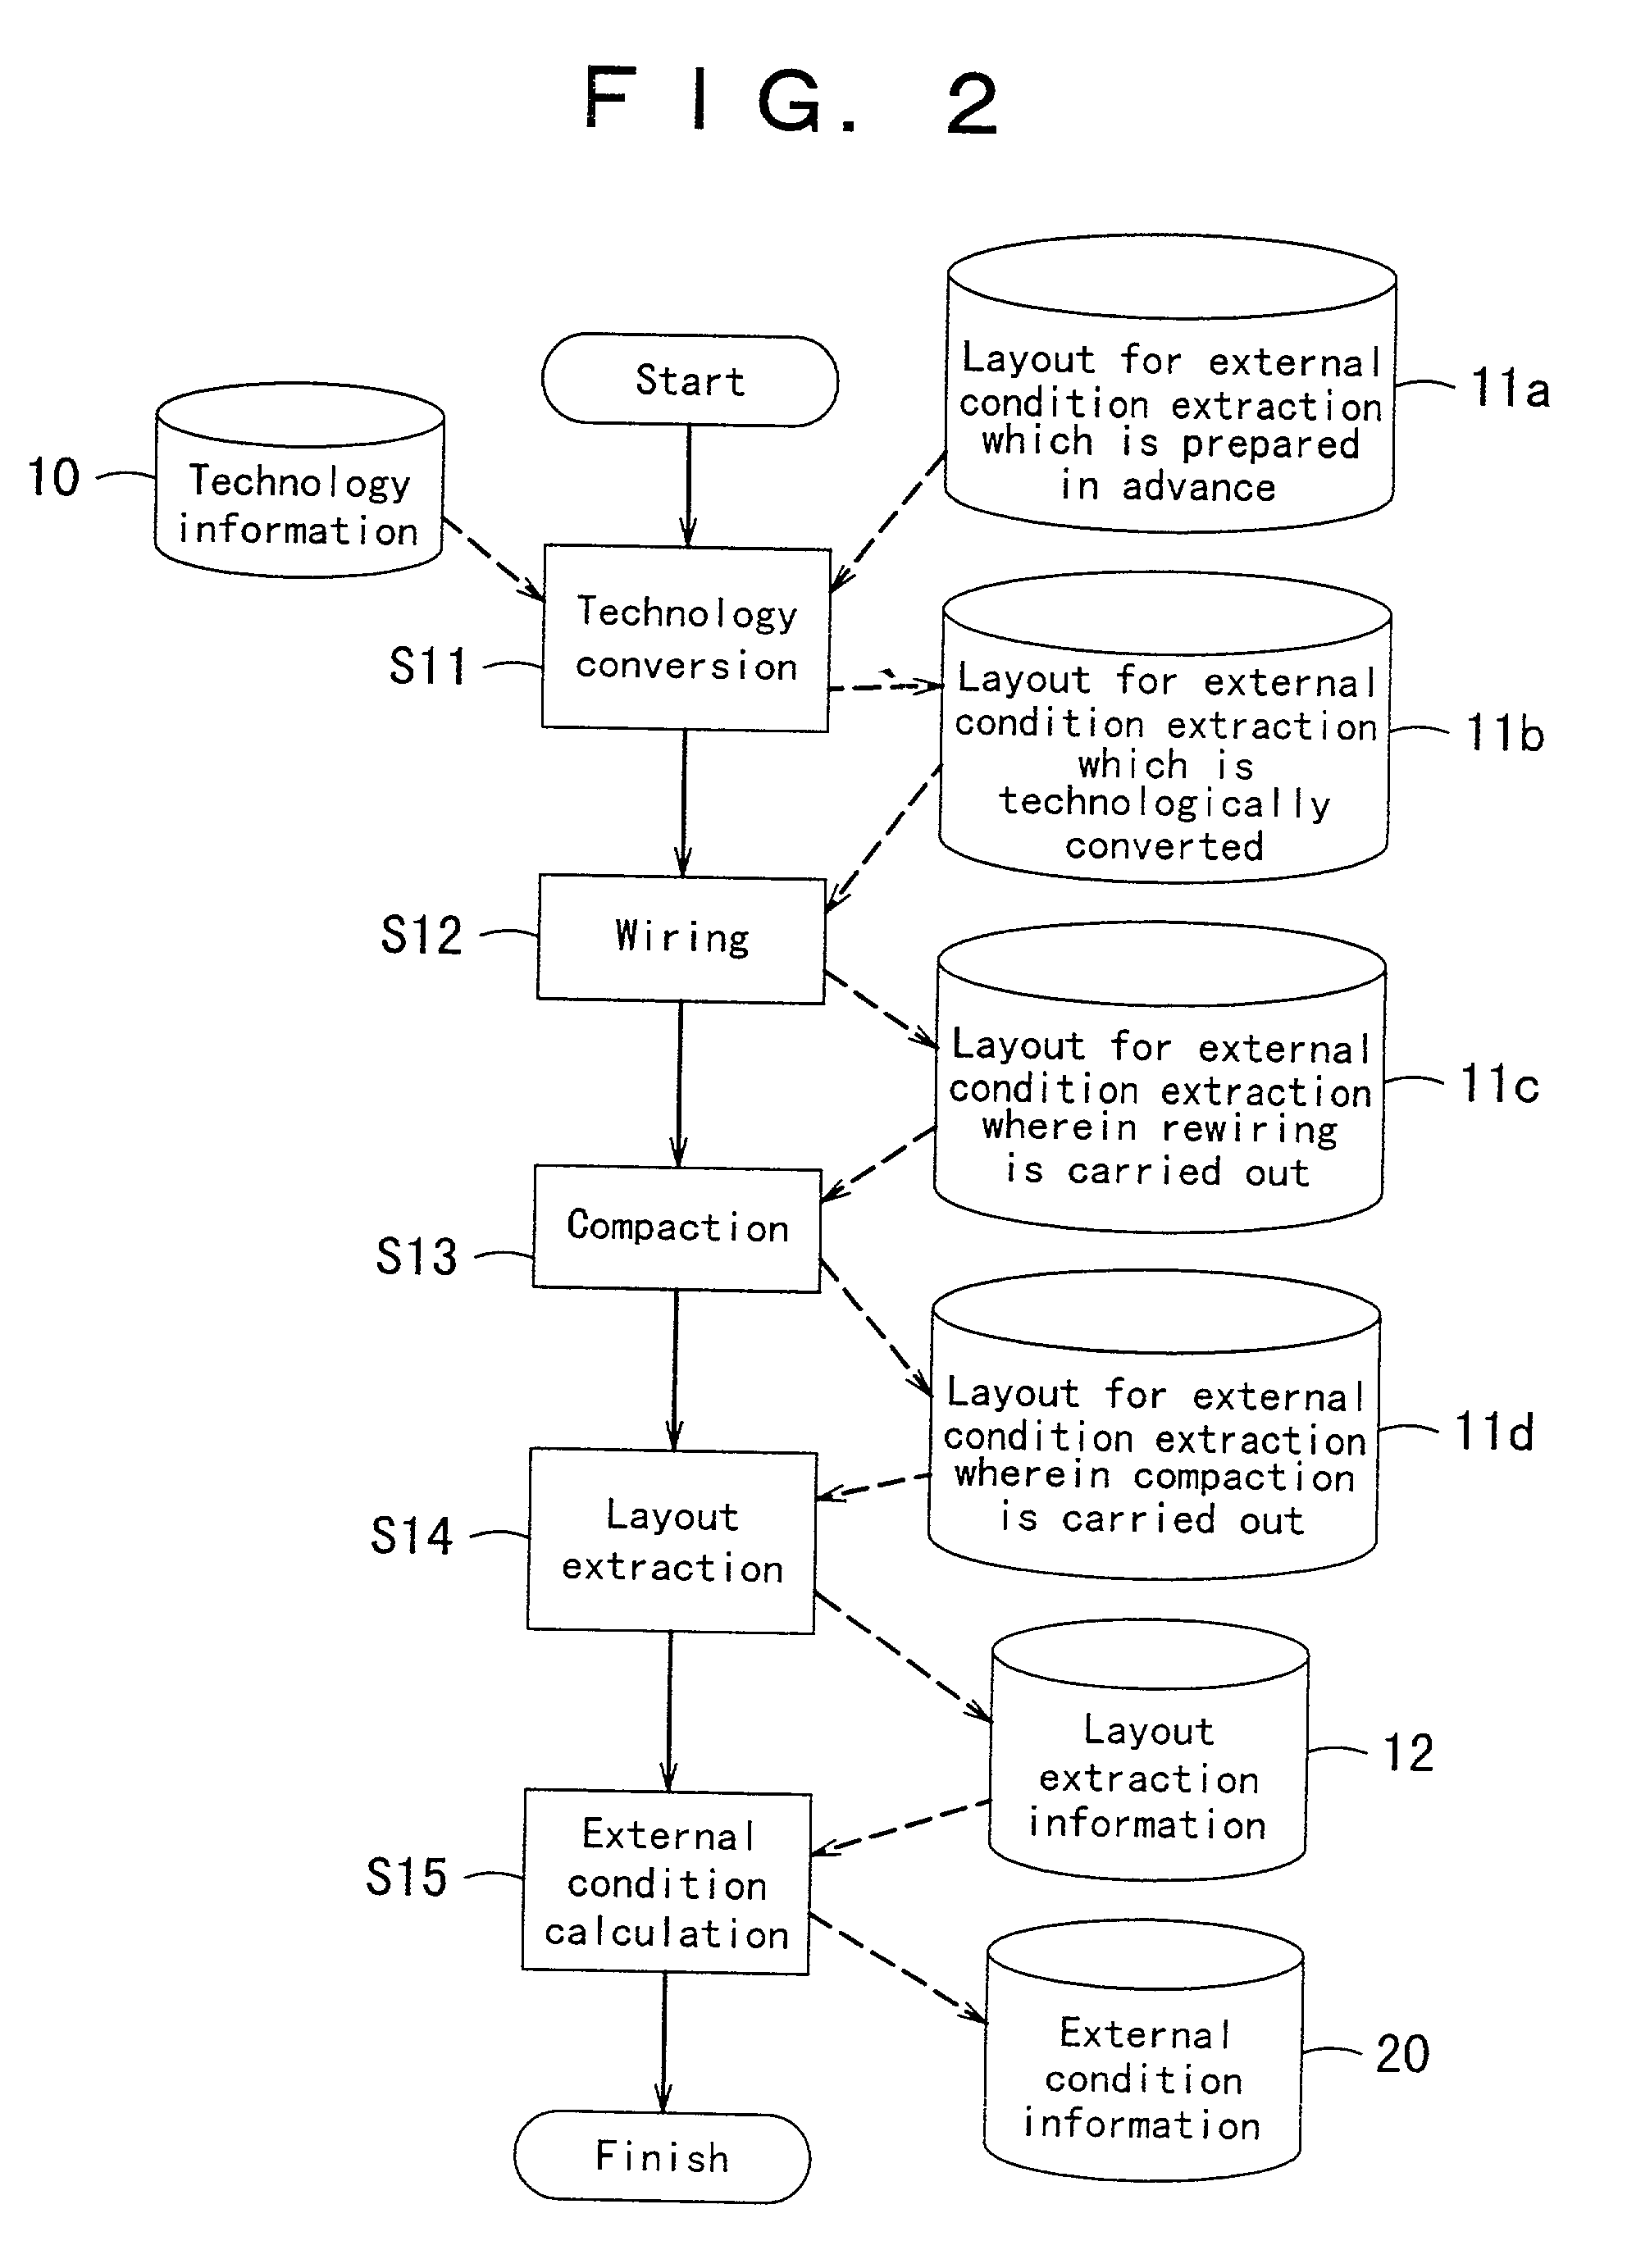 Method for design of partial circuit